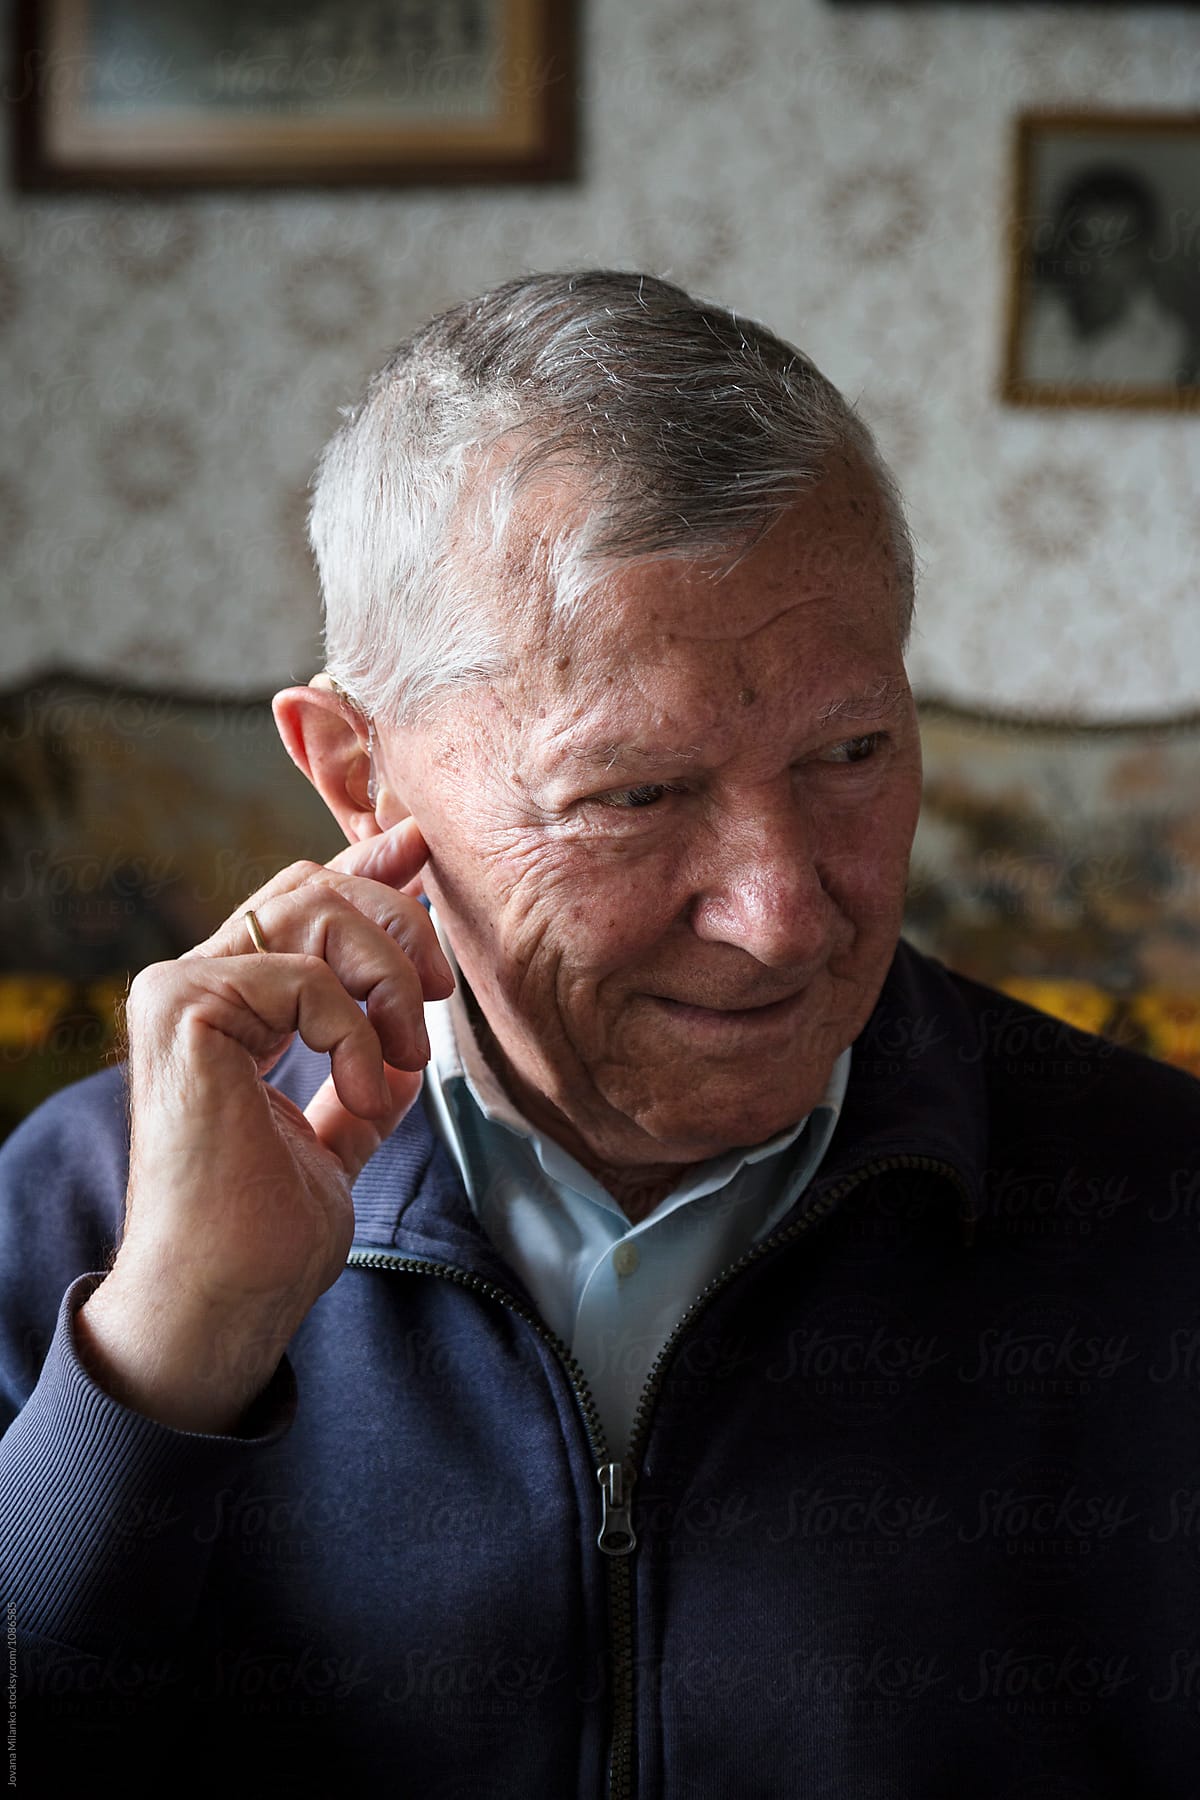 Portrait of a senior man adjusting his hearing device